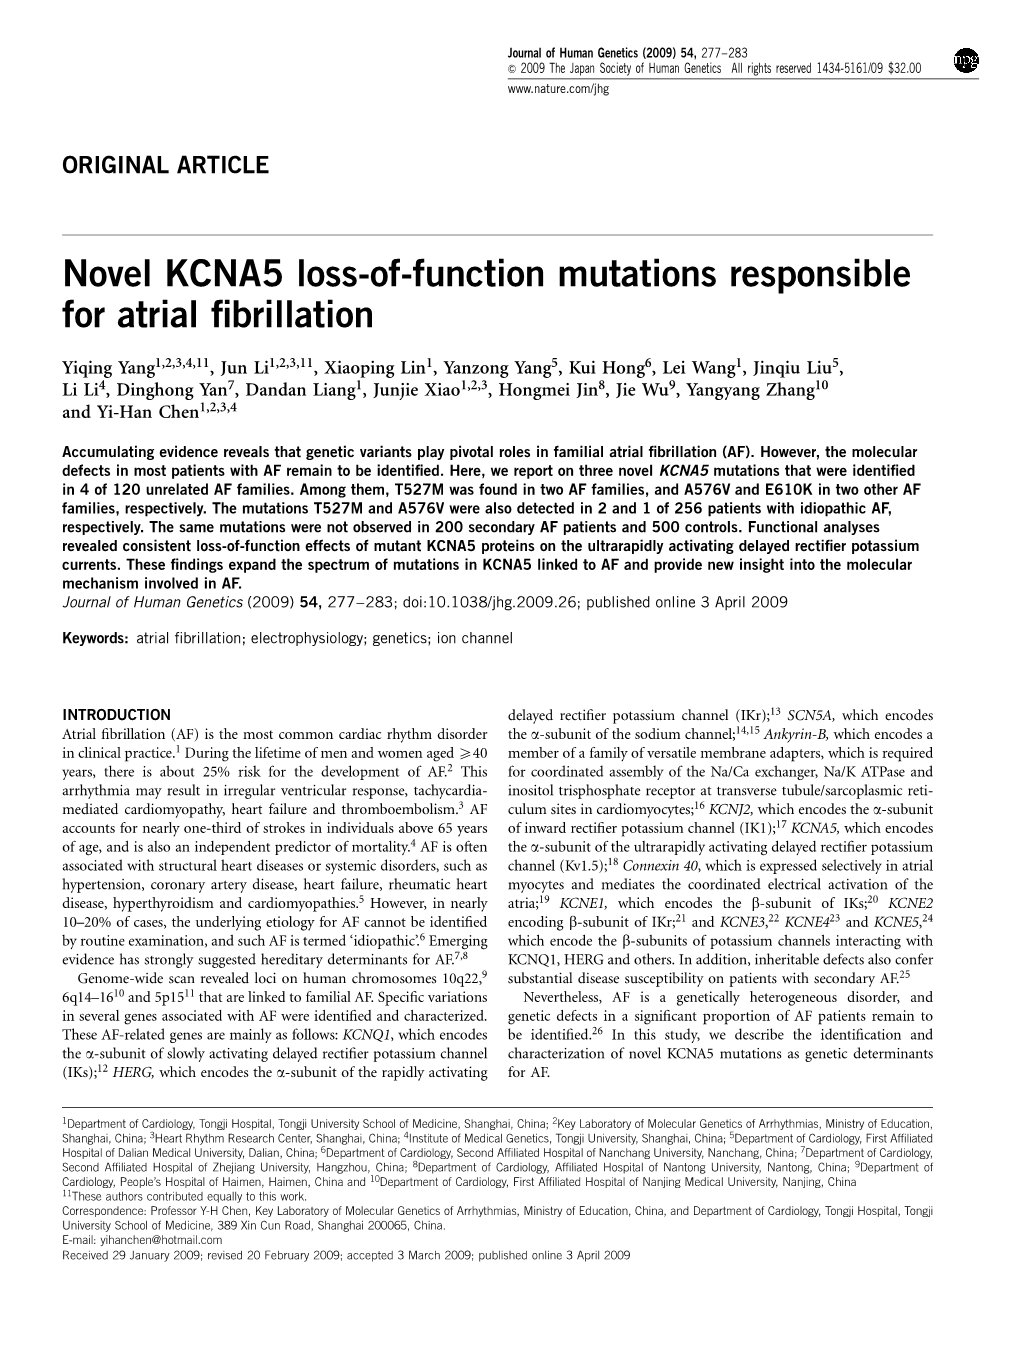 Novel KCNA5 Loss-Of-Function Mutations Responsible for Atrial ﬁbrillation